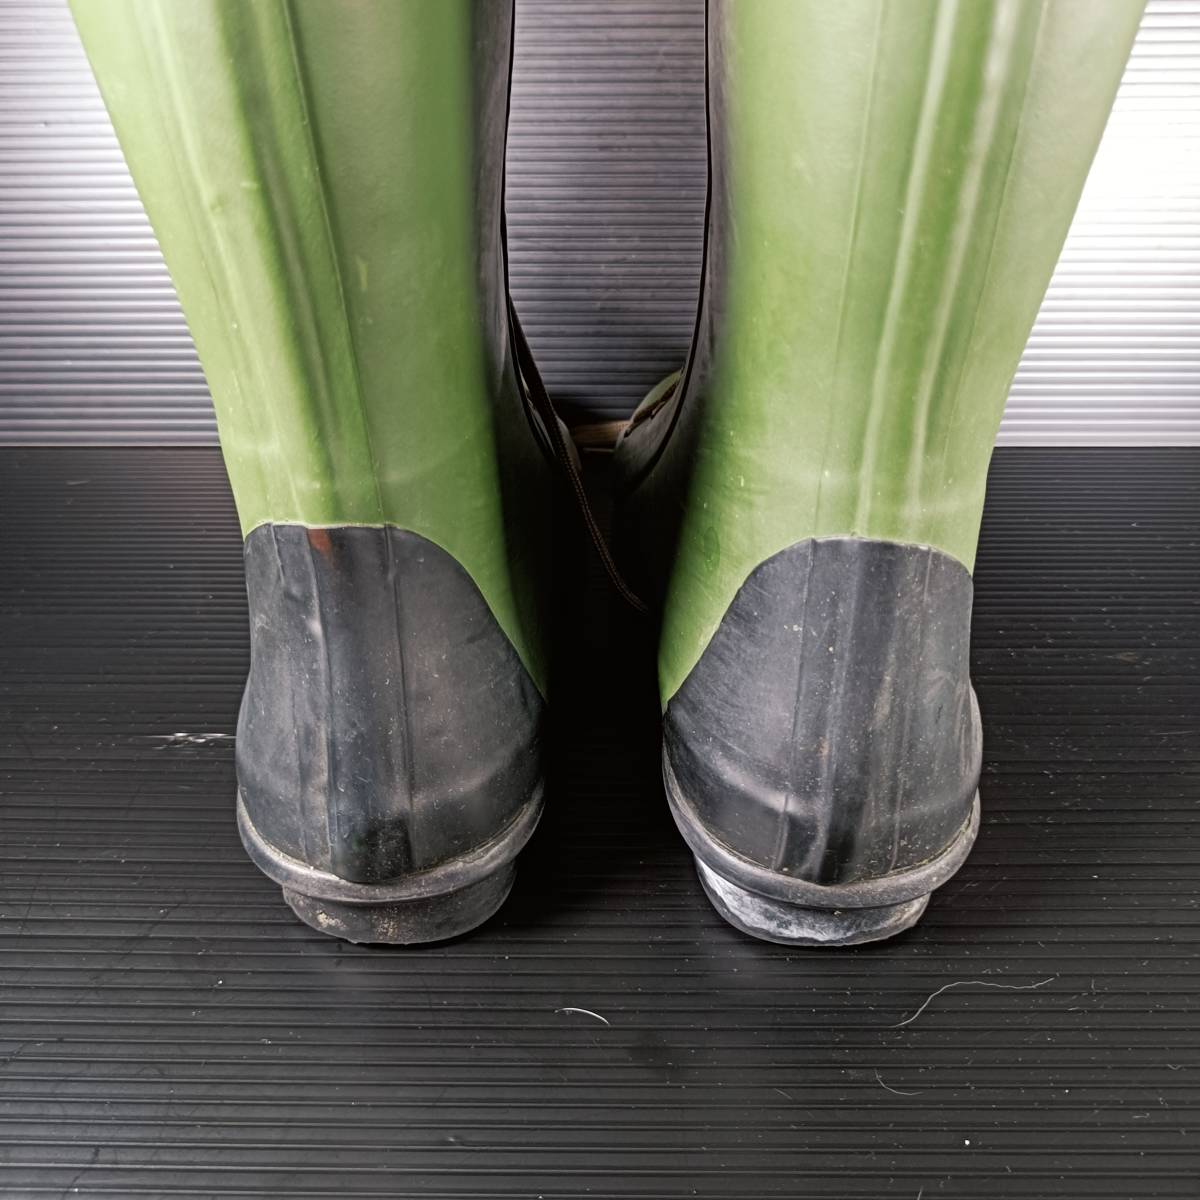 JOUER BOTTE*ju evo te* garden boots * rain boots * braided up boots * size 37 24.0